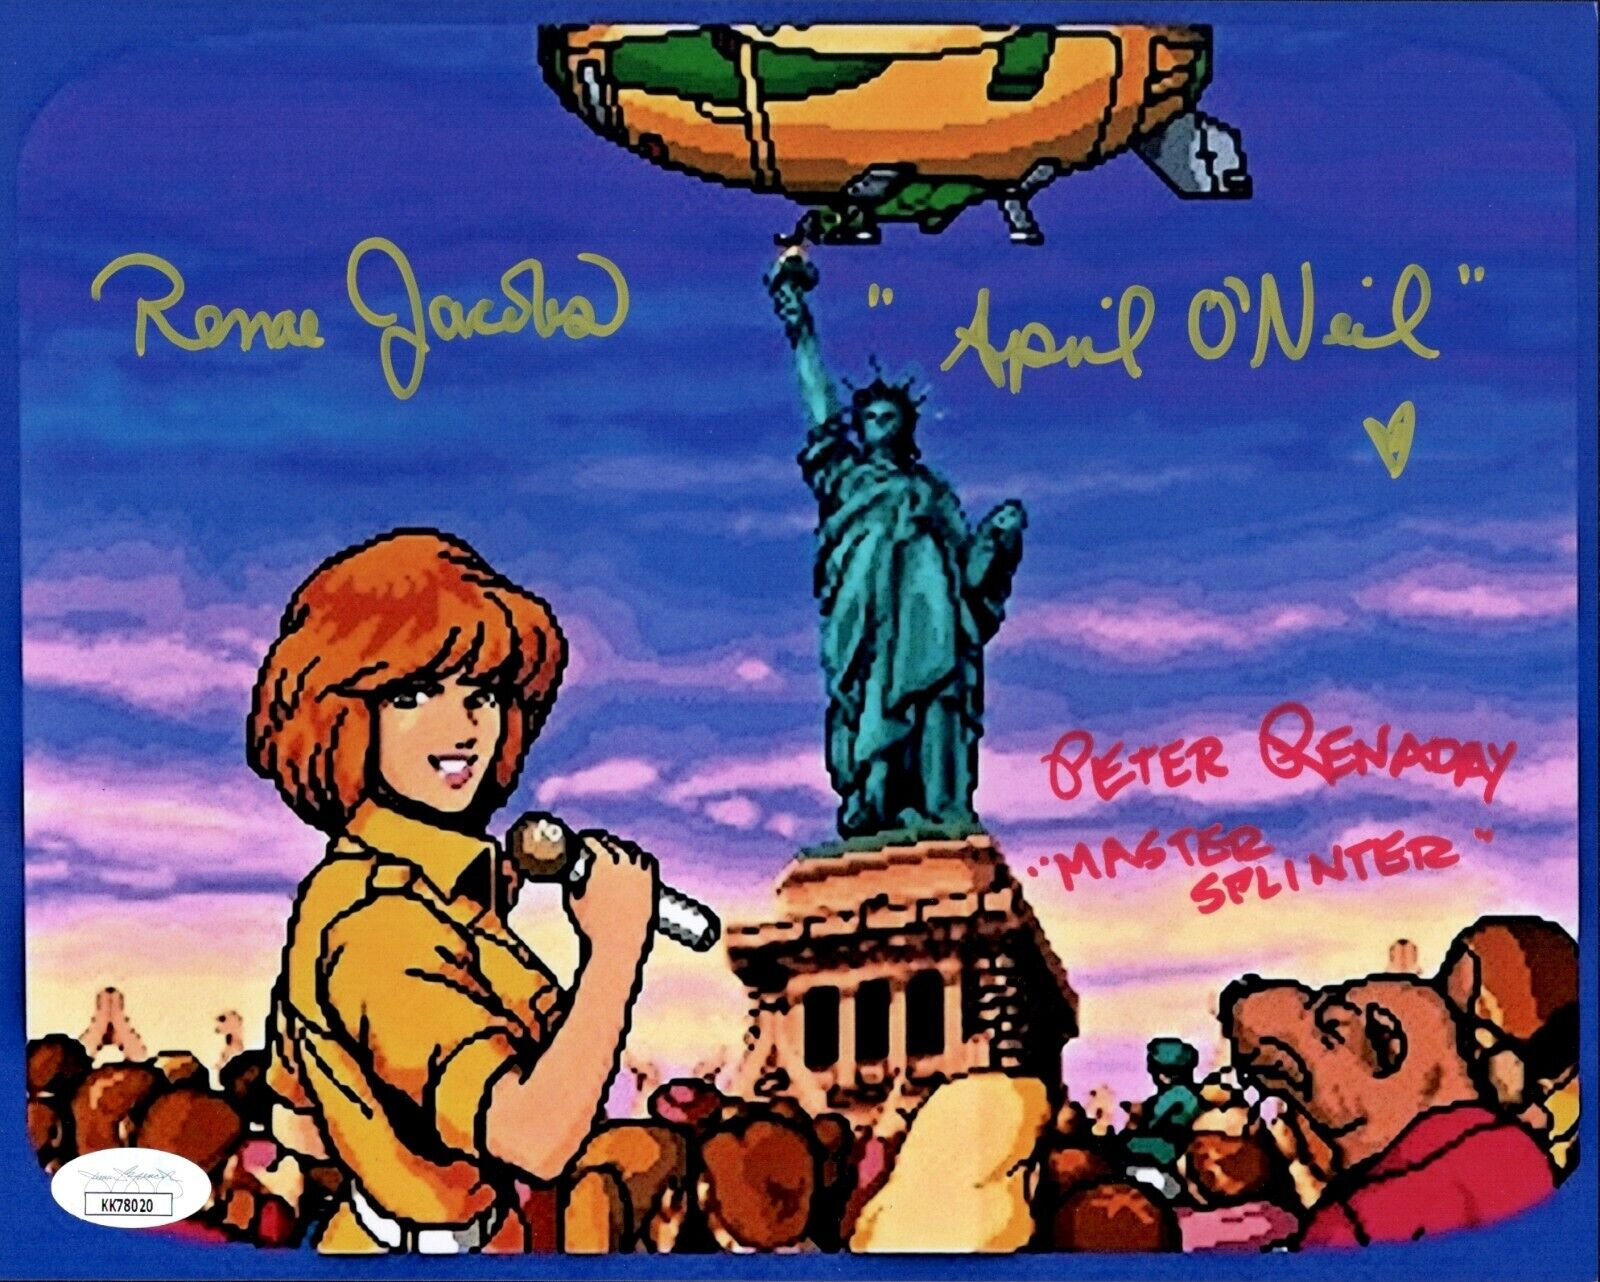 PETER RENADAY & RENAE JACOBS Signed TMNT APRIL & SPLINTER 8x10 Photo Poster painting JSA COA